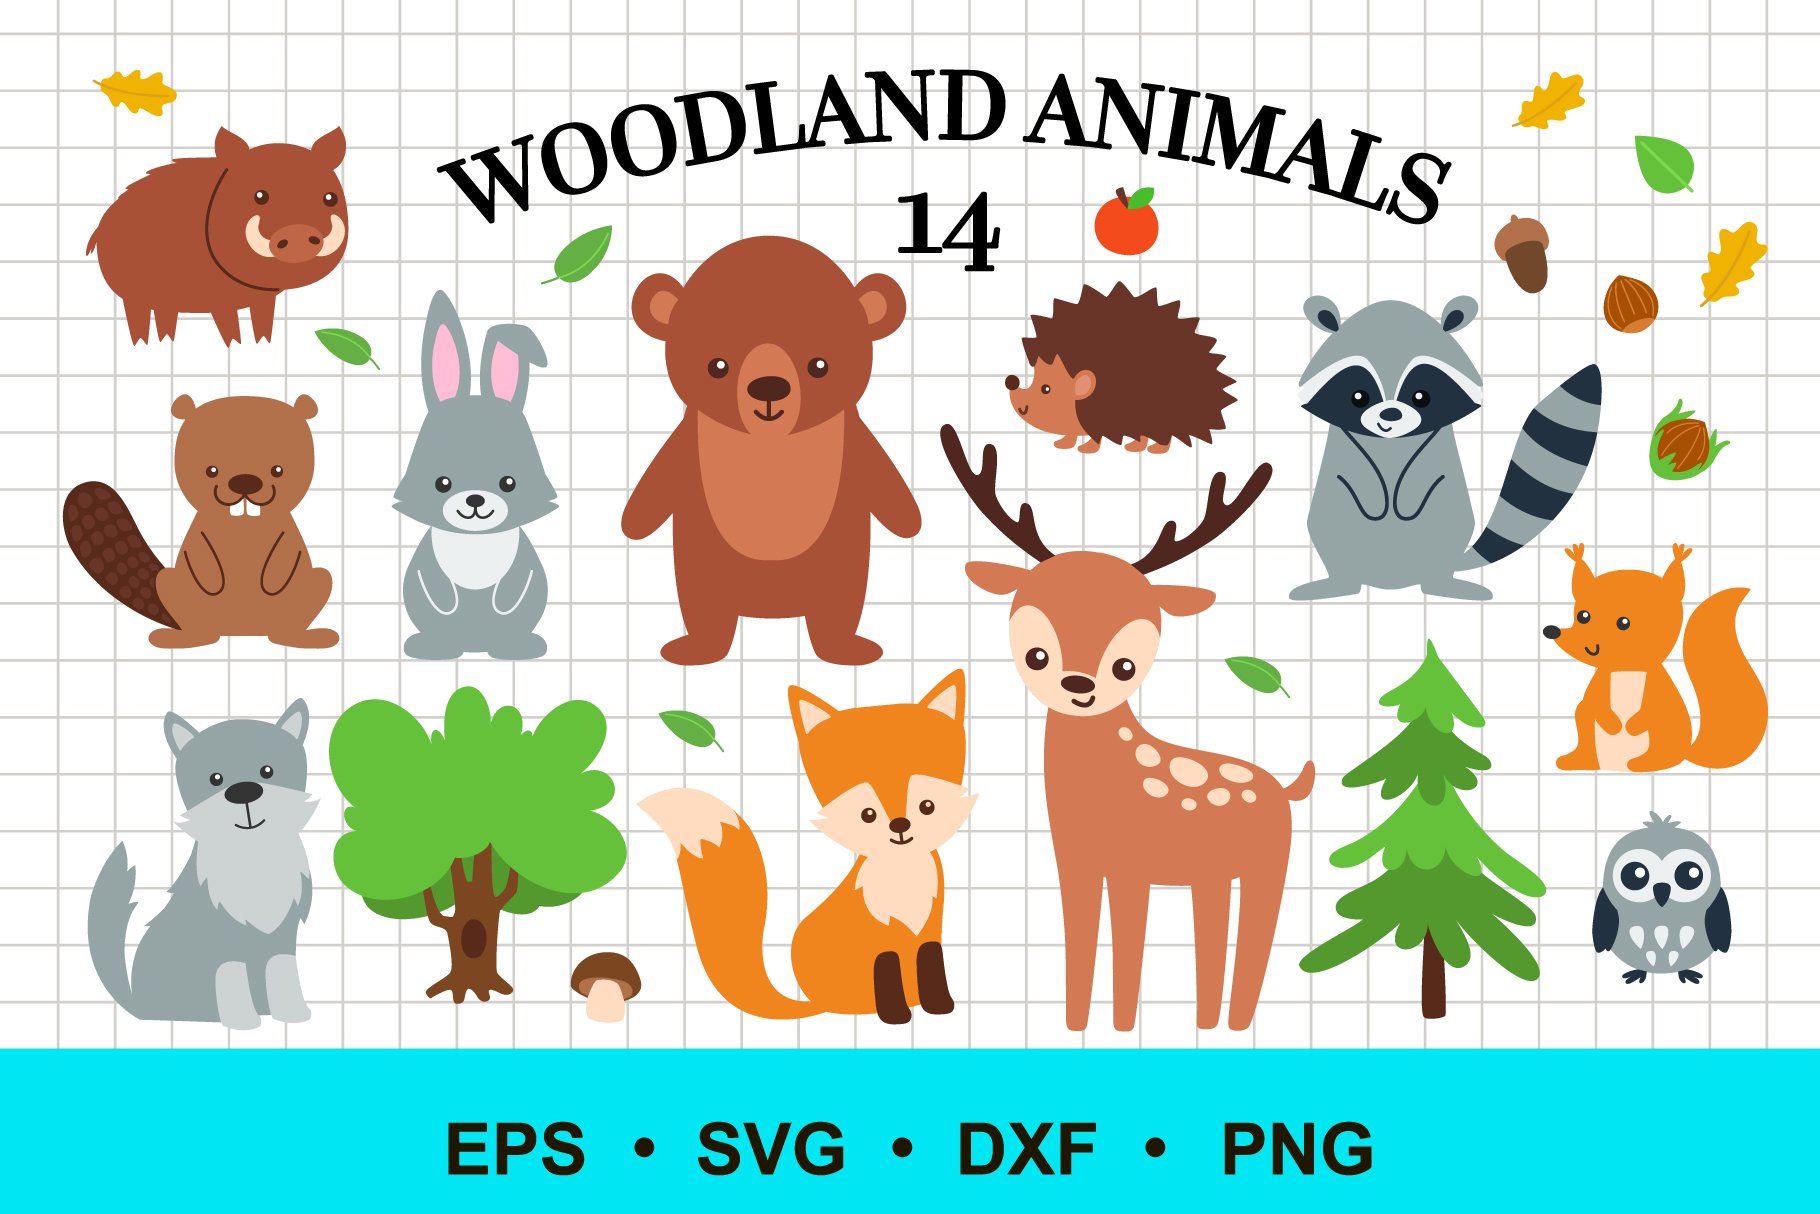 Woodland Animals Clip Art cover image.